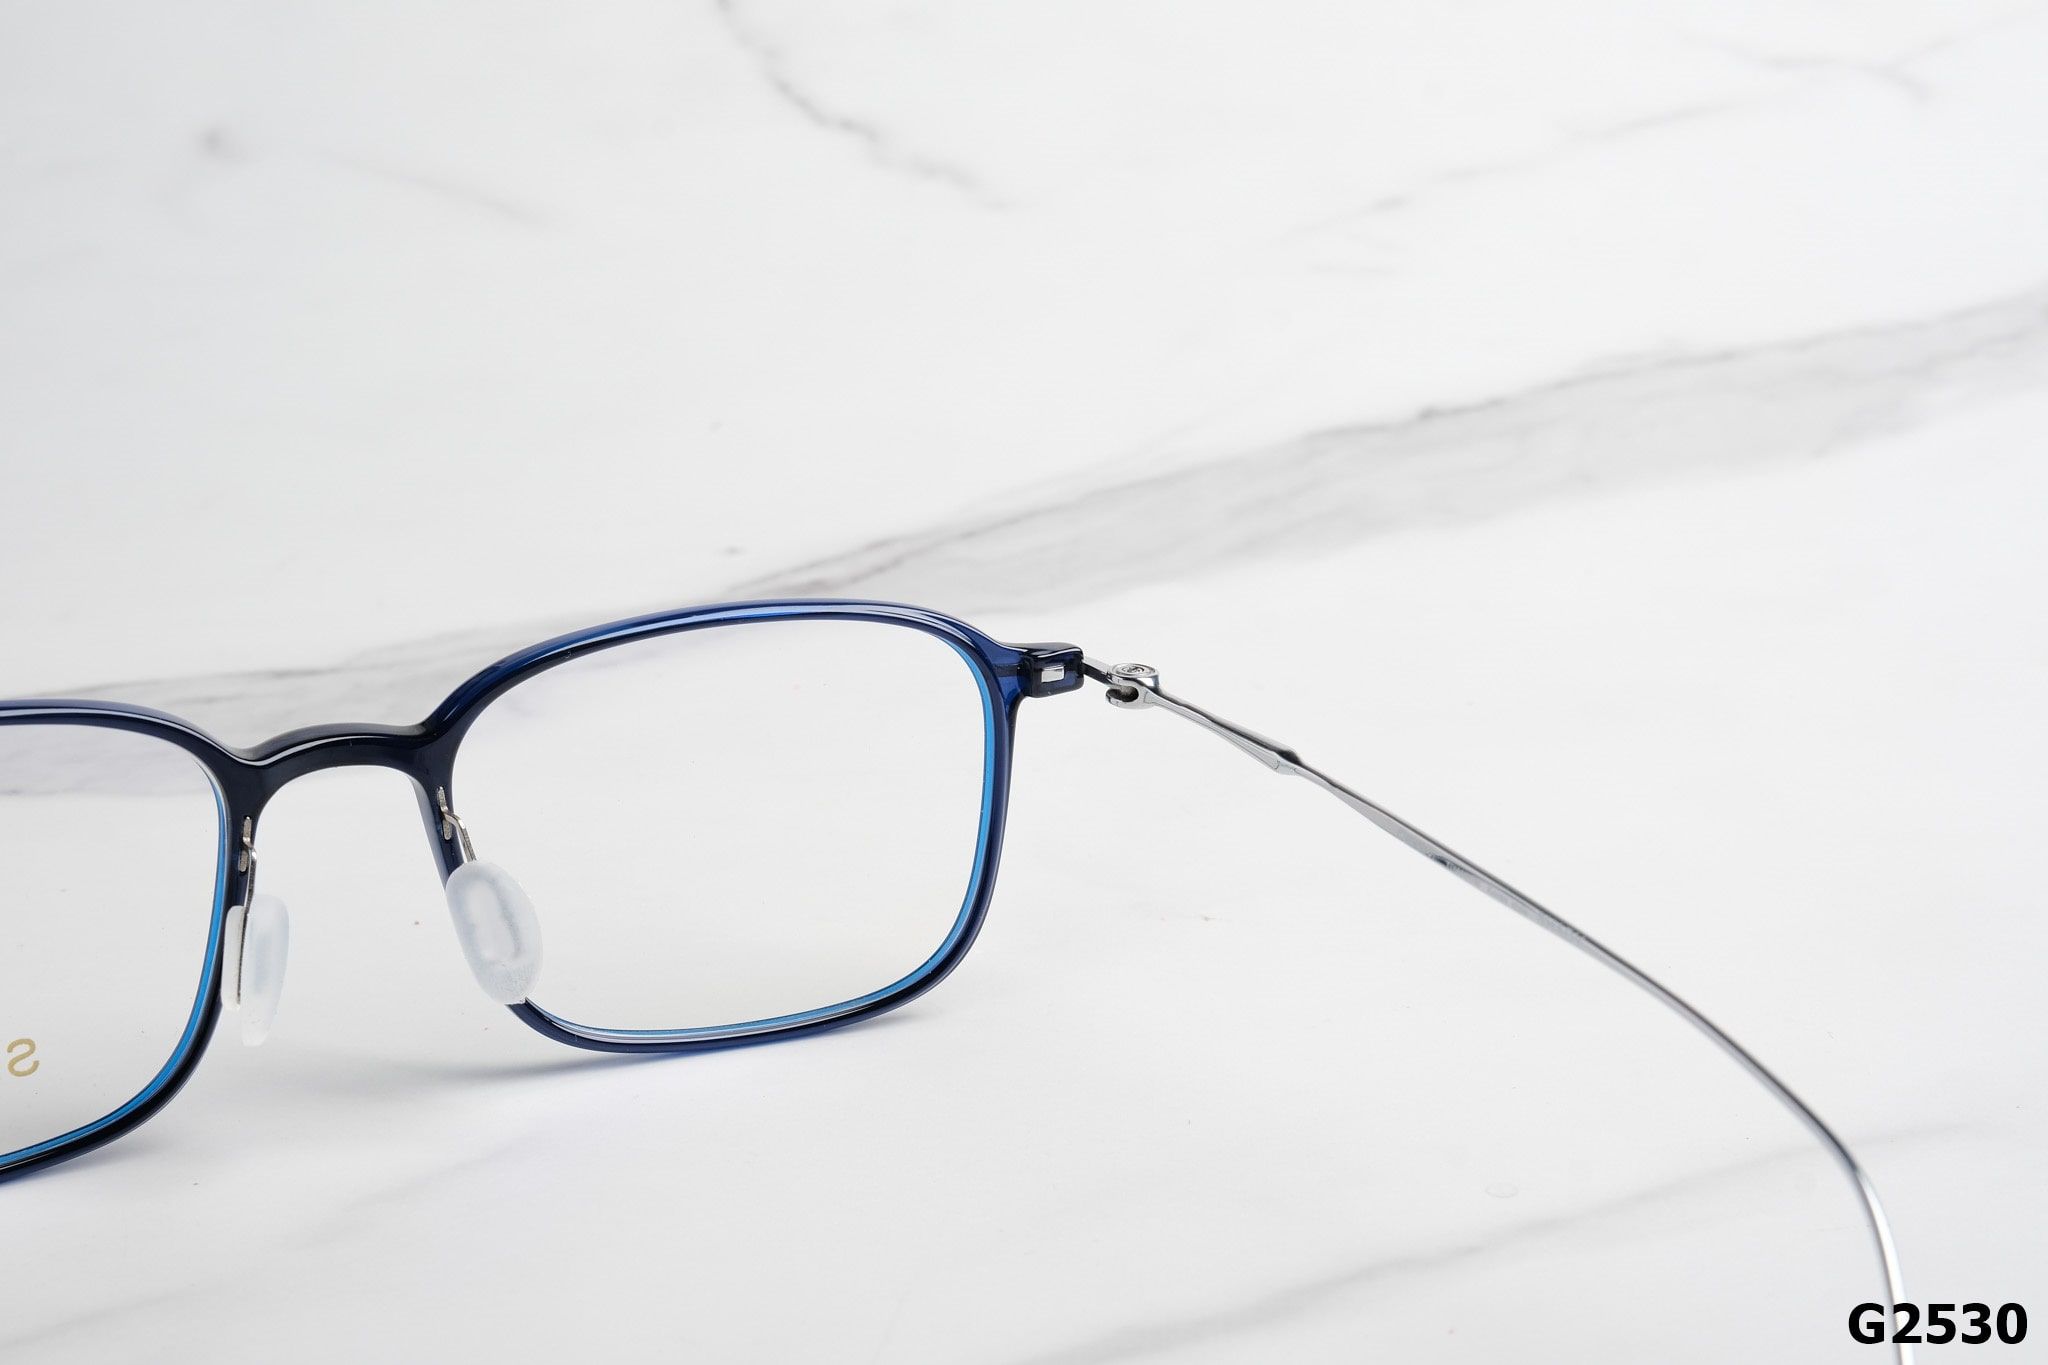  SHADY Eyewear - Glasses - G2530 